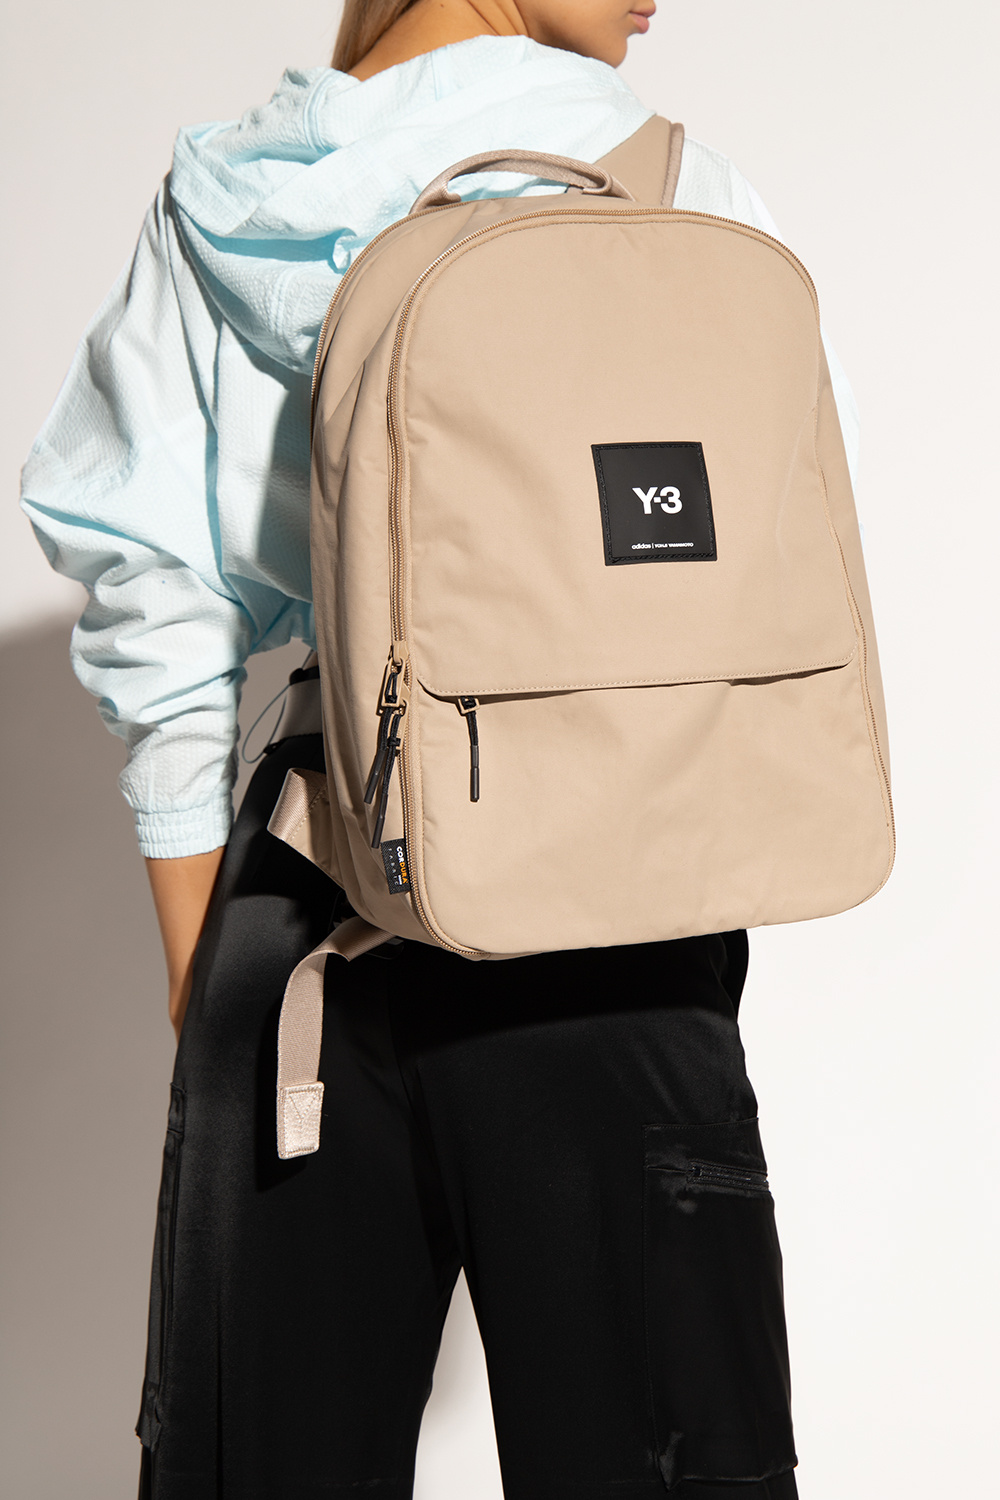 Y-3 Yohji Yamamoto Emilio Pucci Junior floral-print changing bag